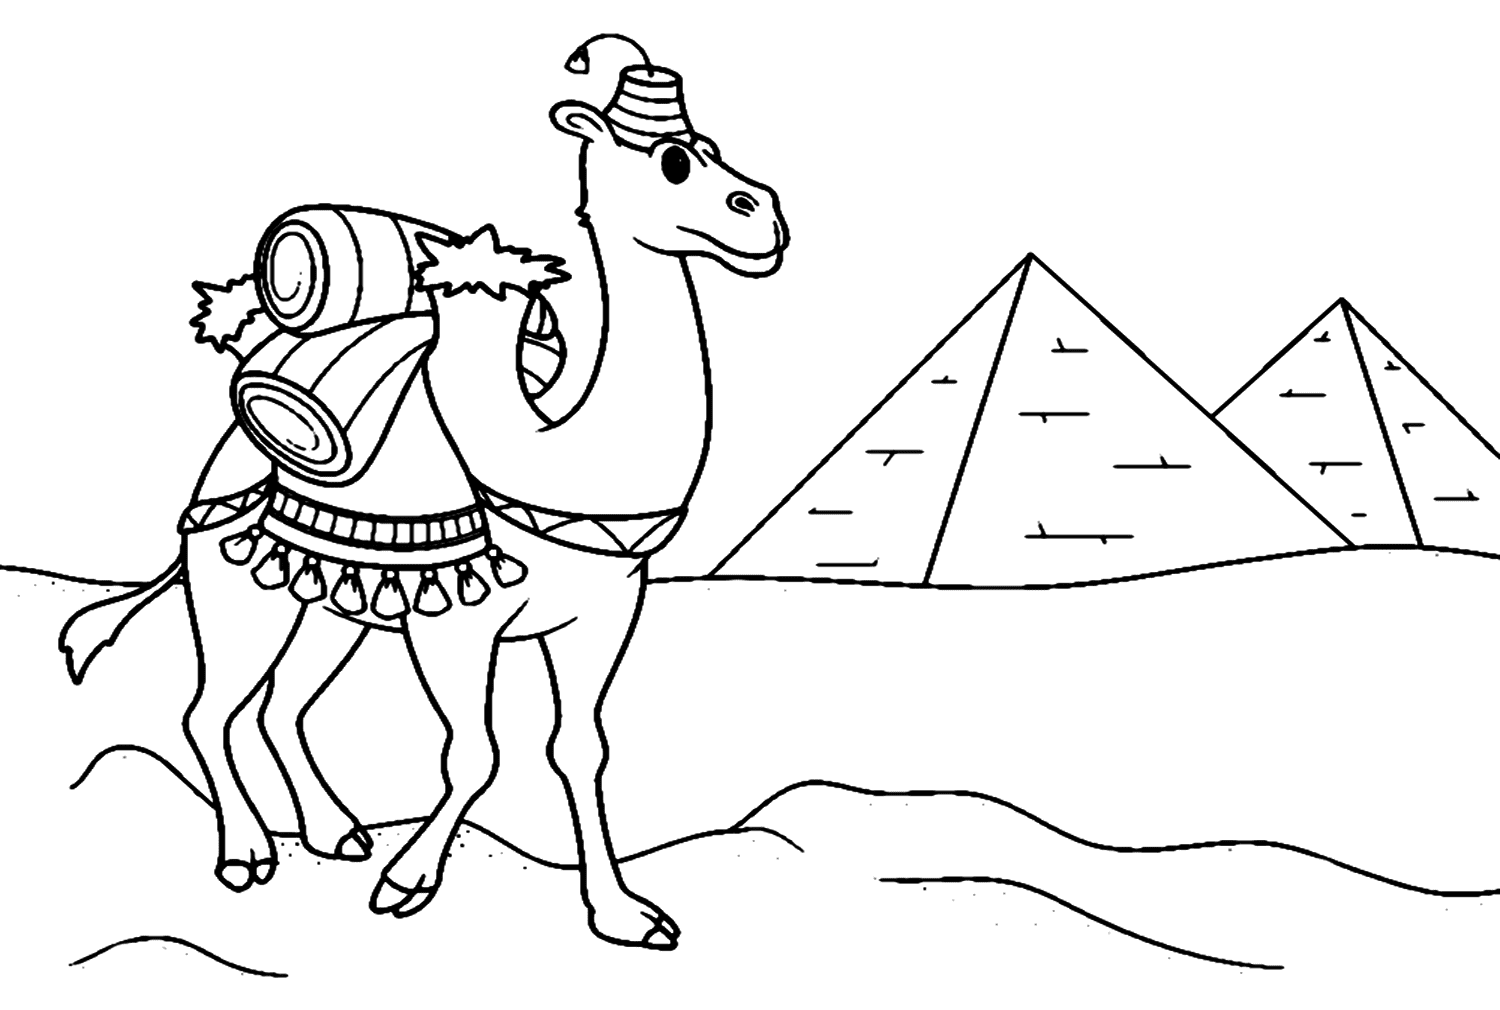 Kamel transportiert Fracht von Kamel